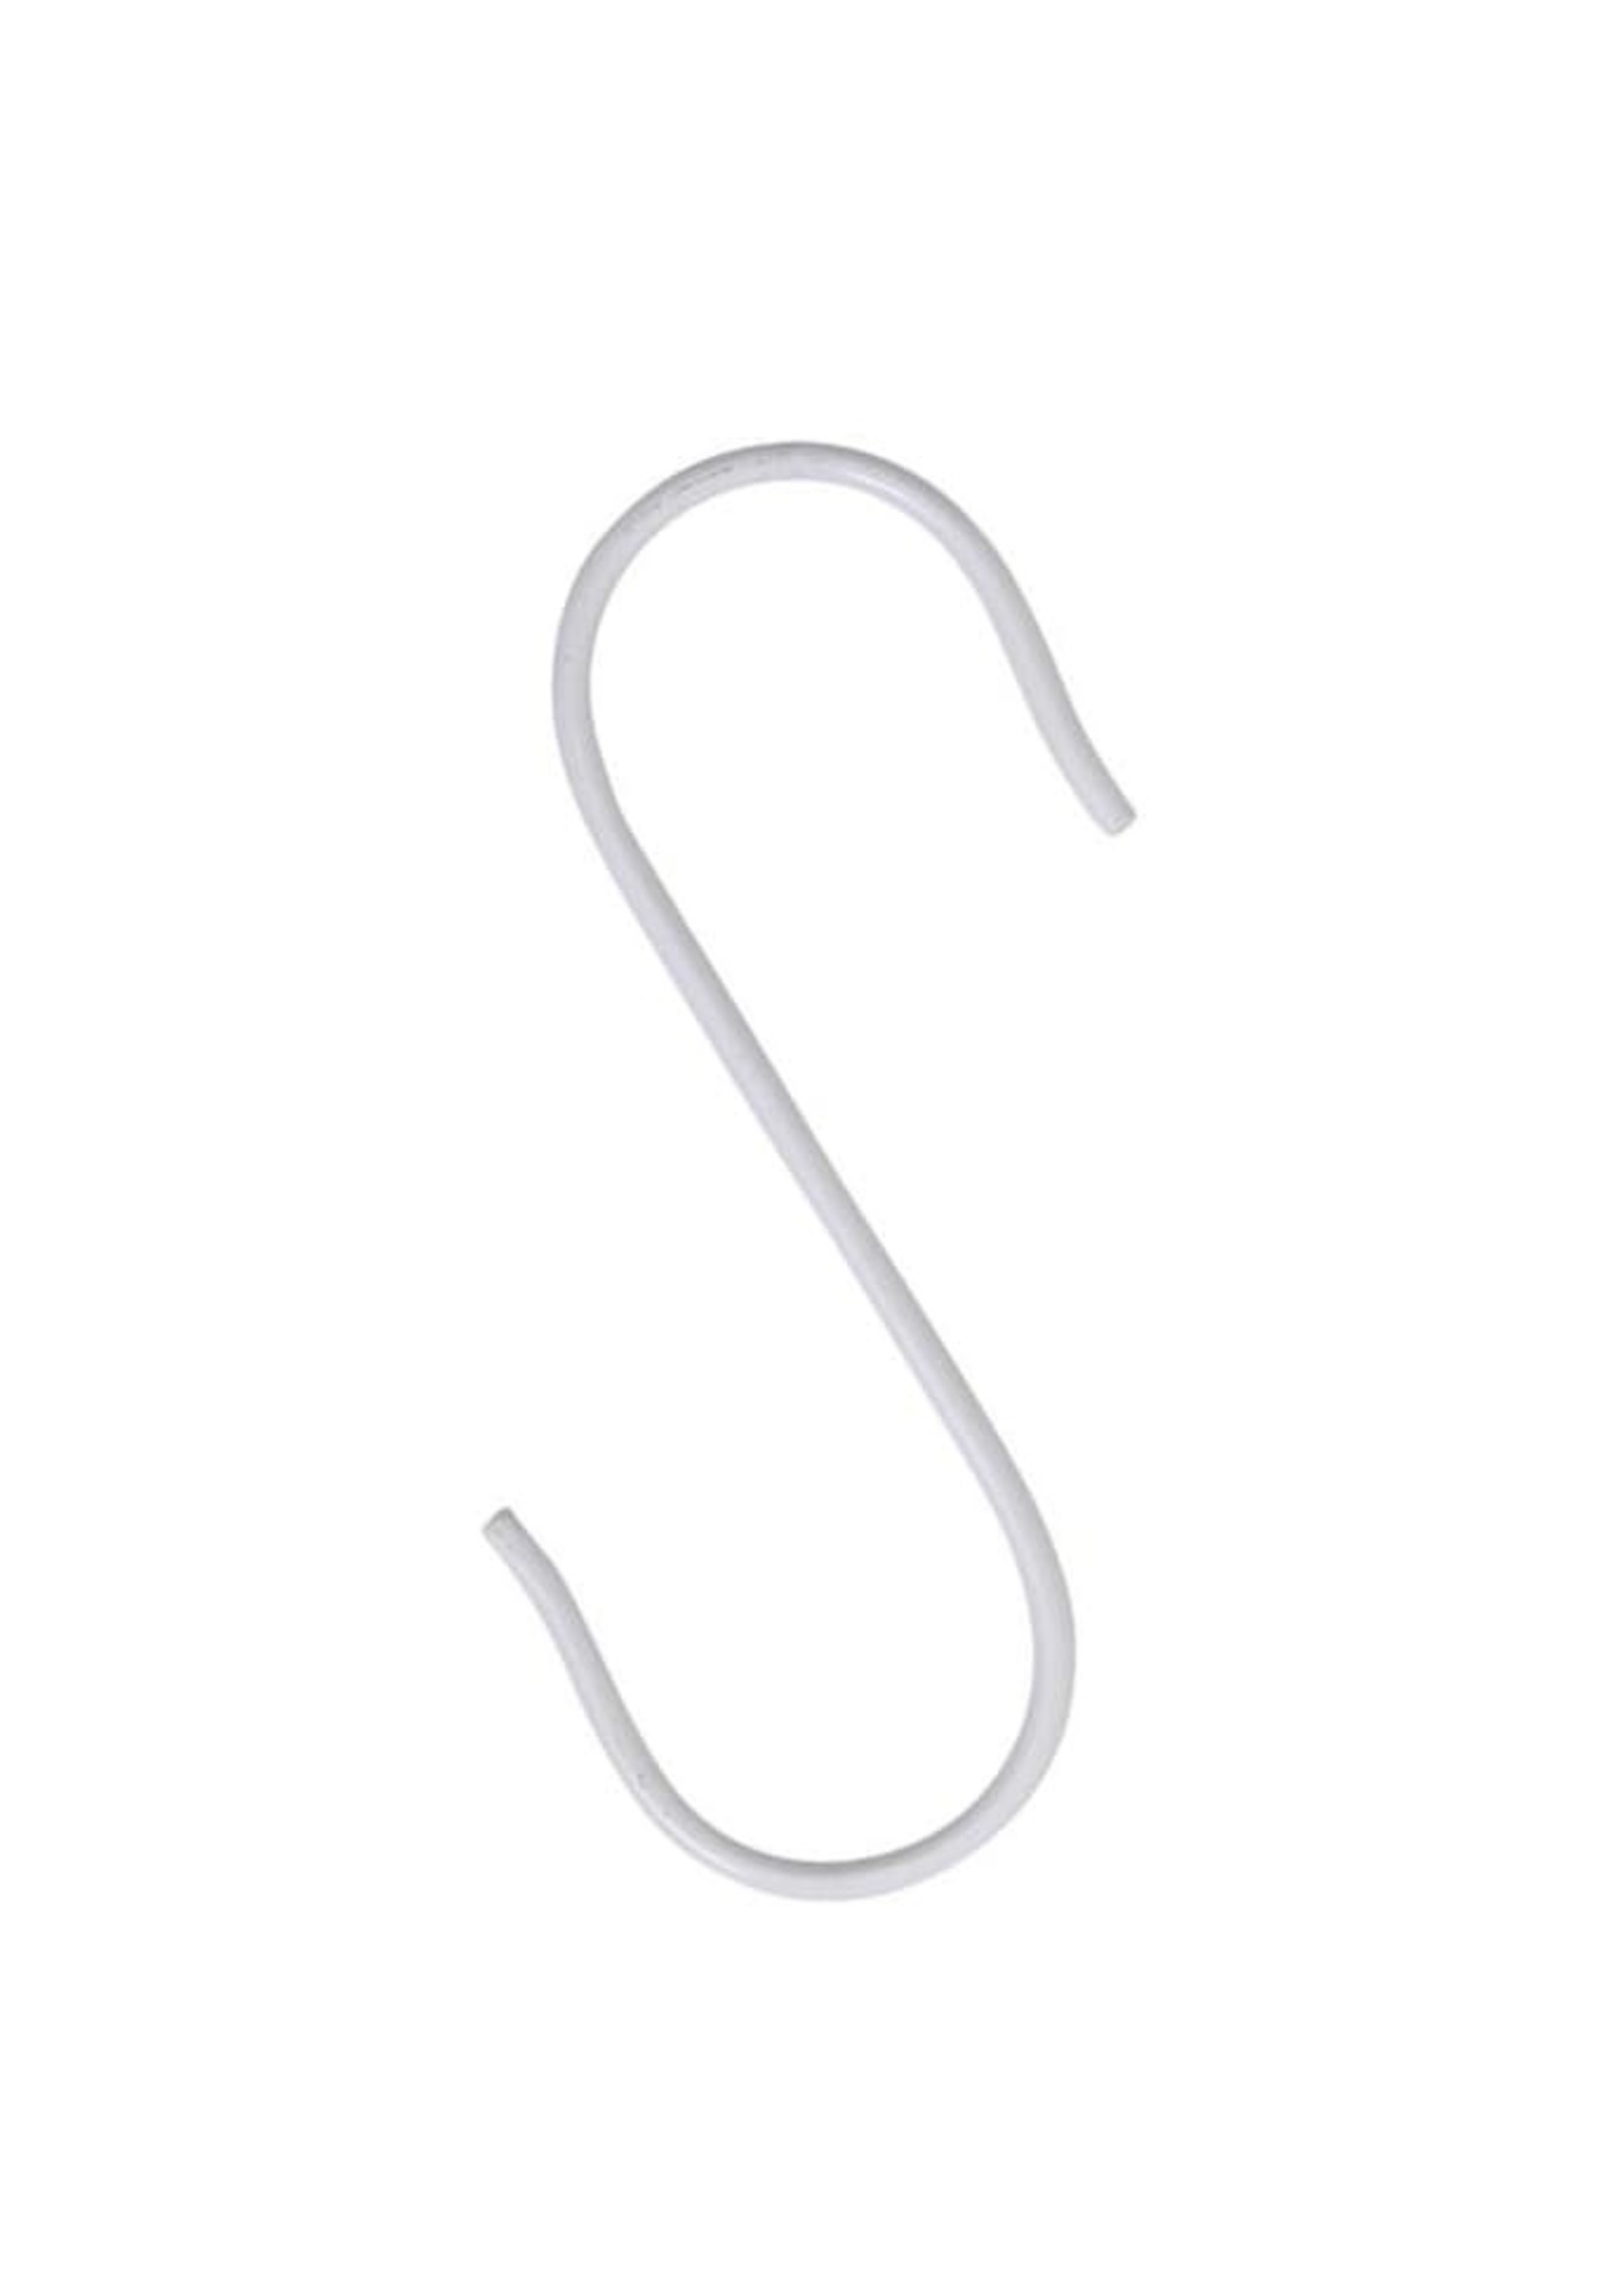 S-hook 15 x 5 cm - Iron - White [L]